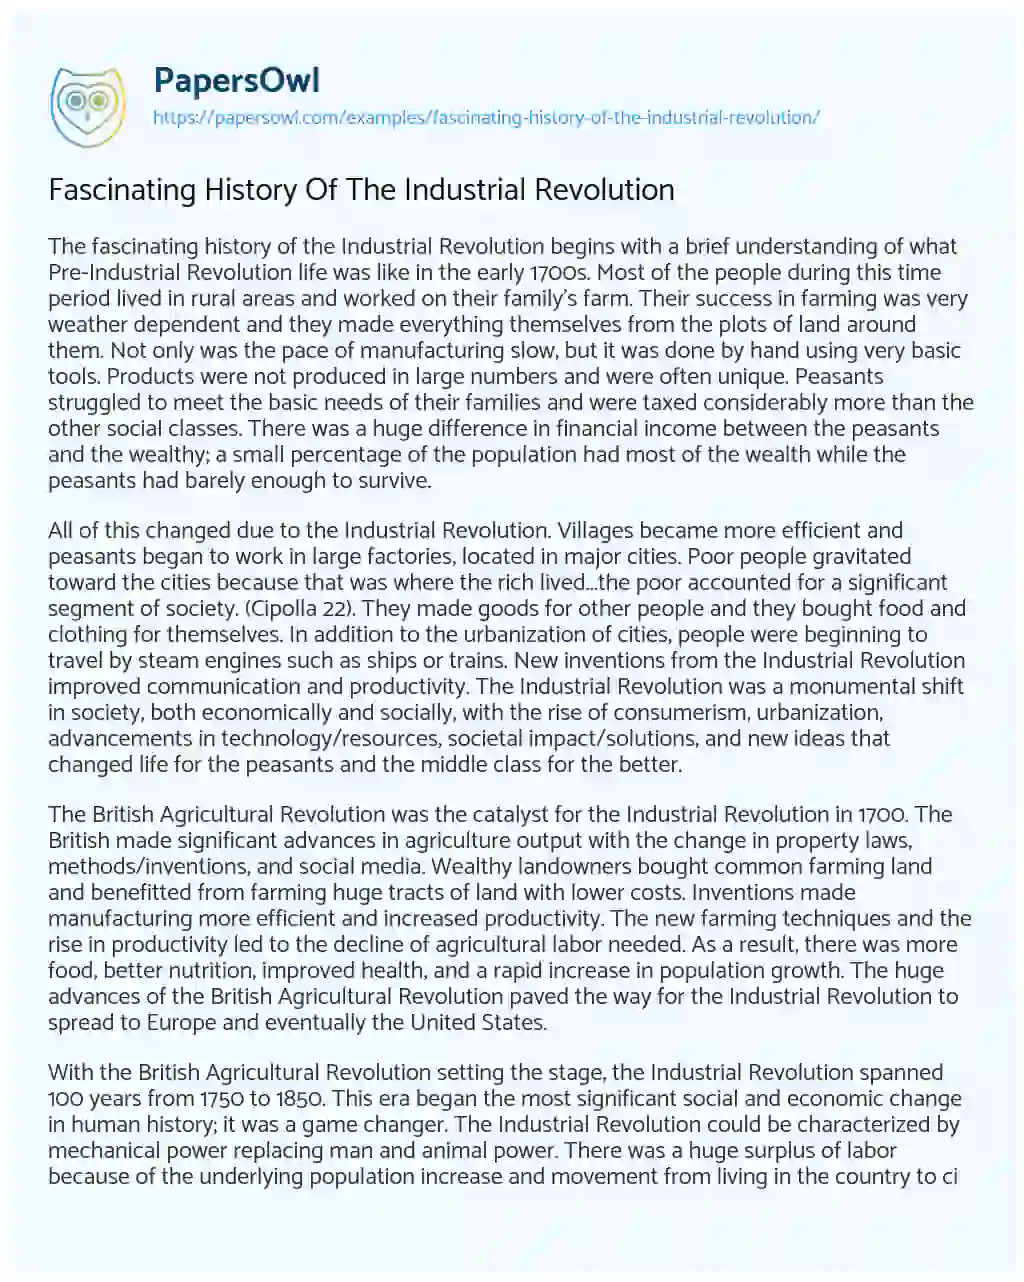 Fascinating History of the Industrial Revolution essay